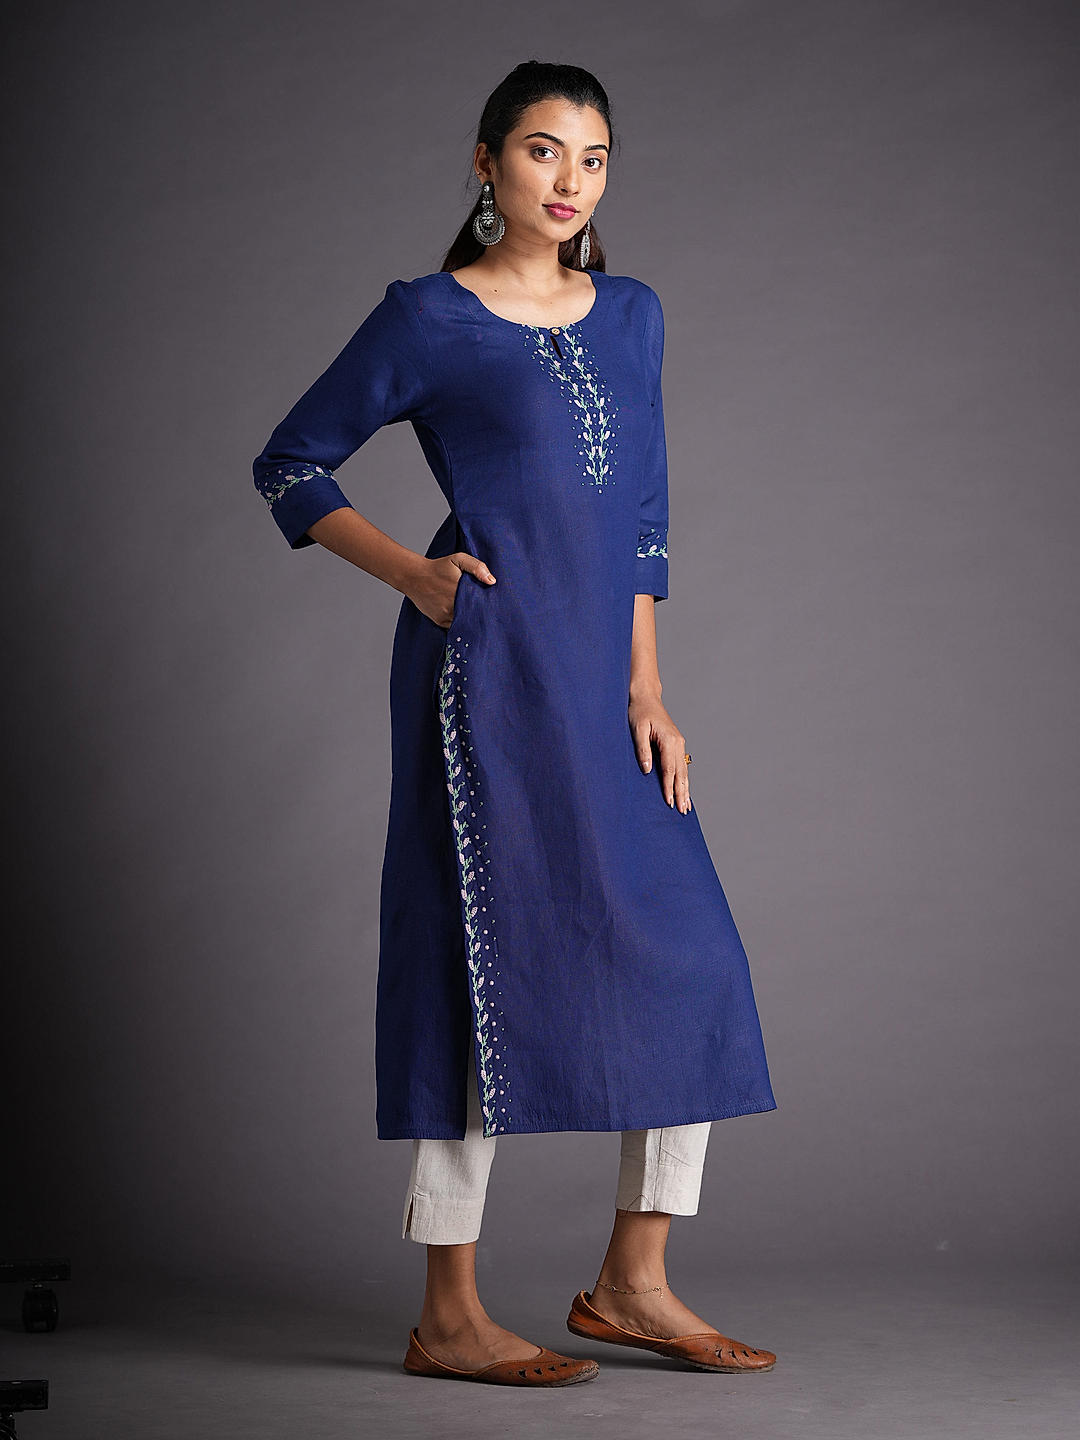 Royal Blue Solid Colour Kurtis – The Pajama Factory